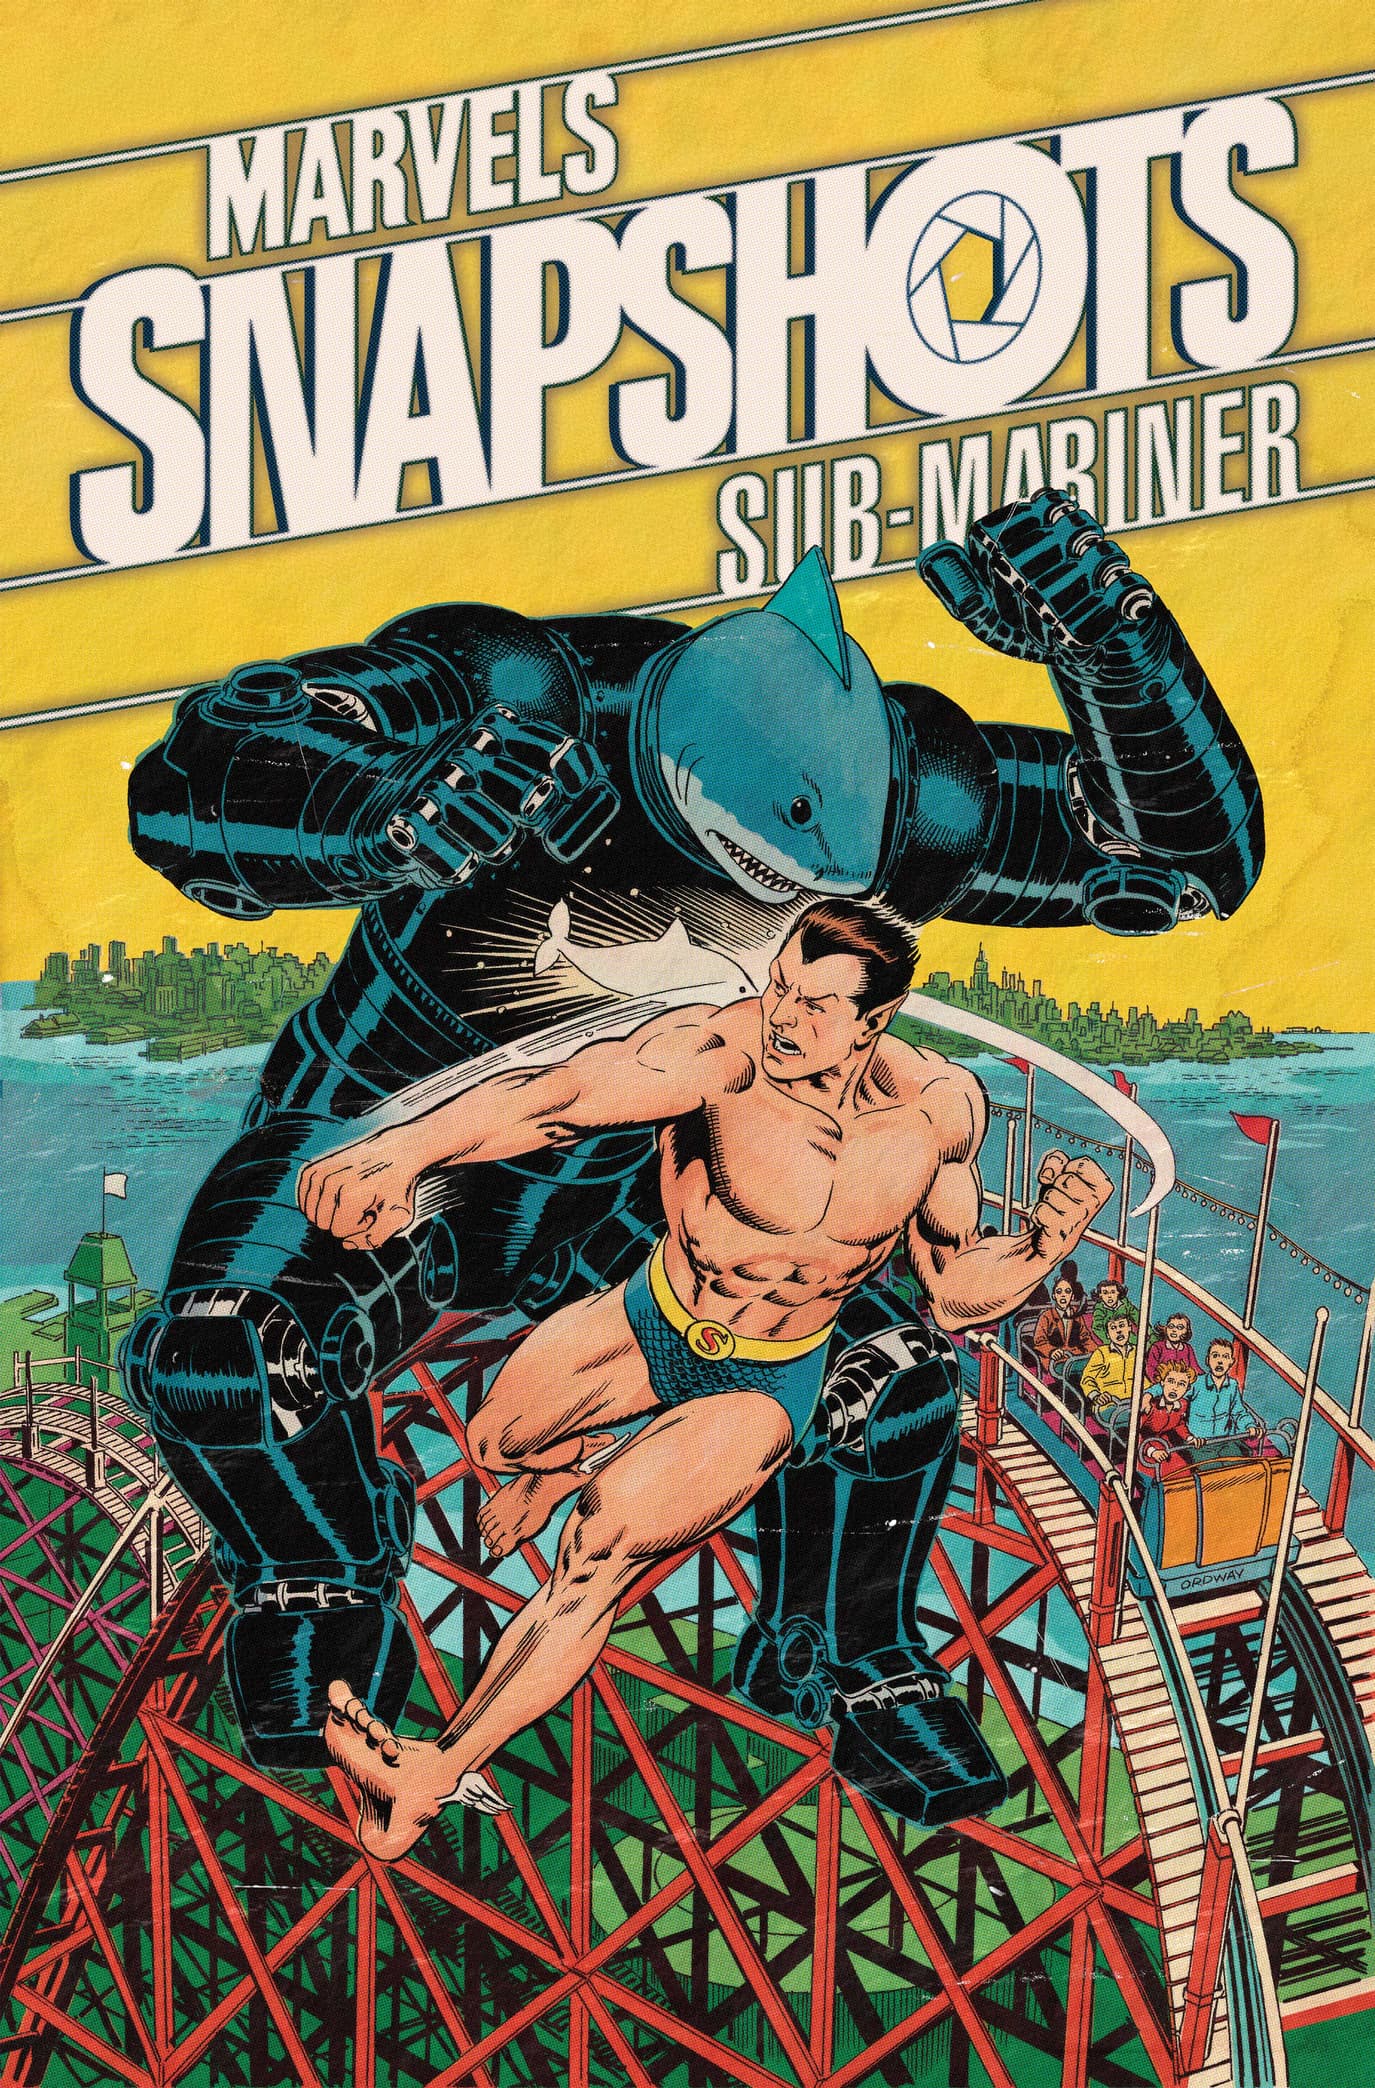 Sub-Mariner Marvels Snapshot variant cover